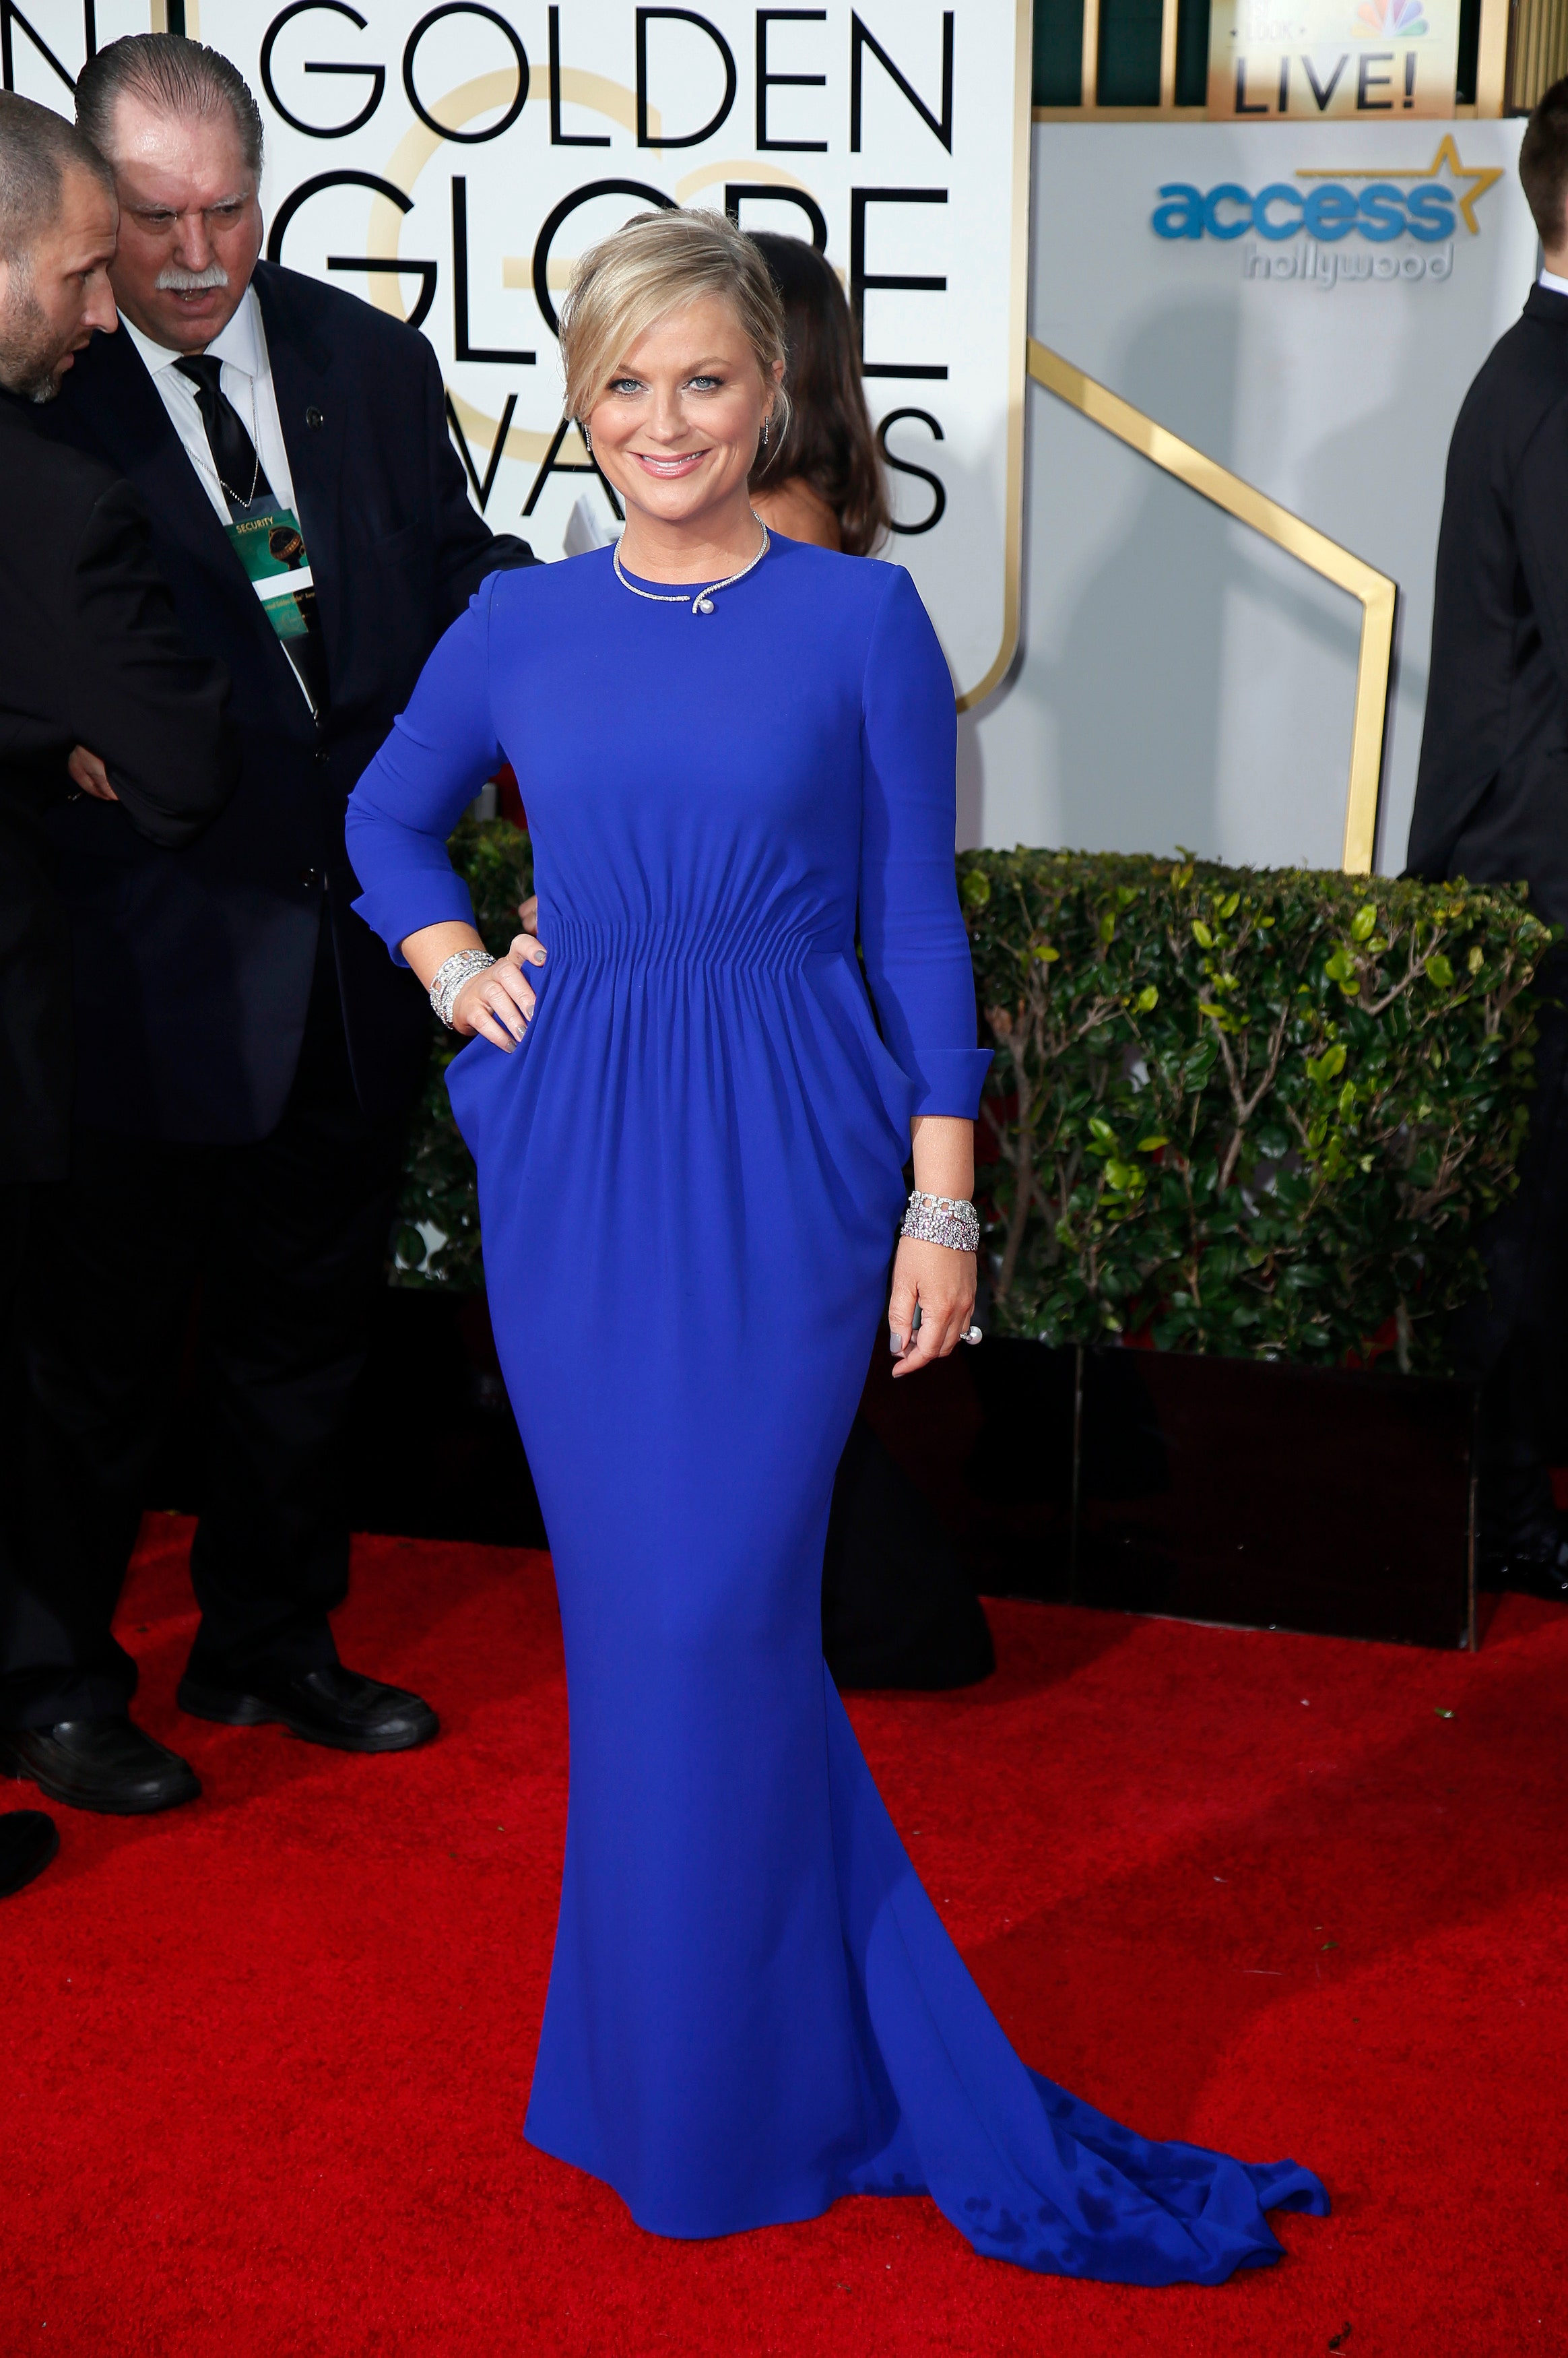 Golden Globes Red Carpet: Hot or not? | Slideshow | Fox News